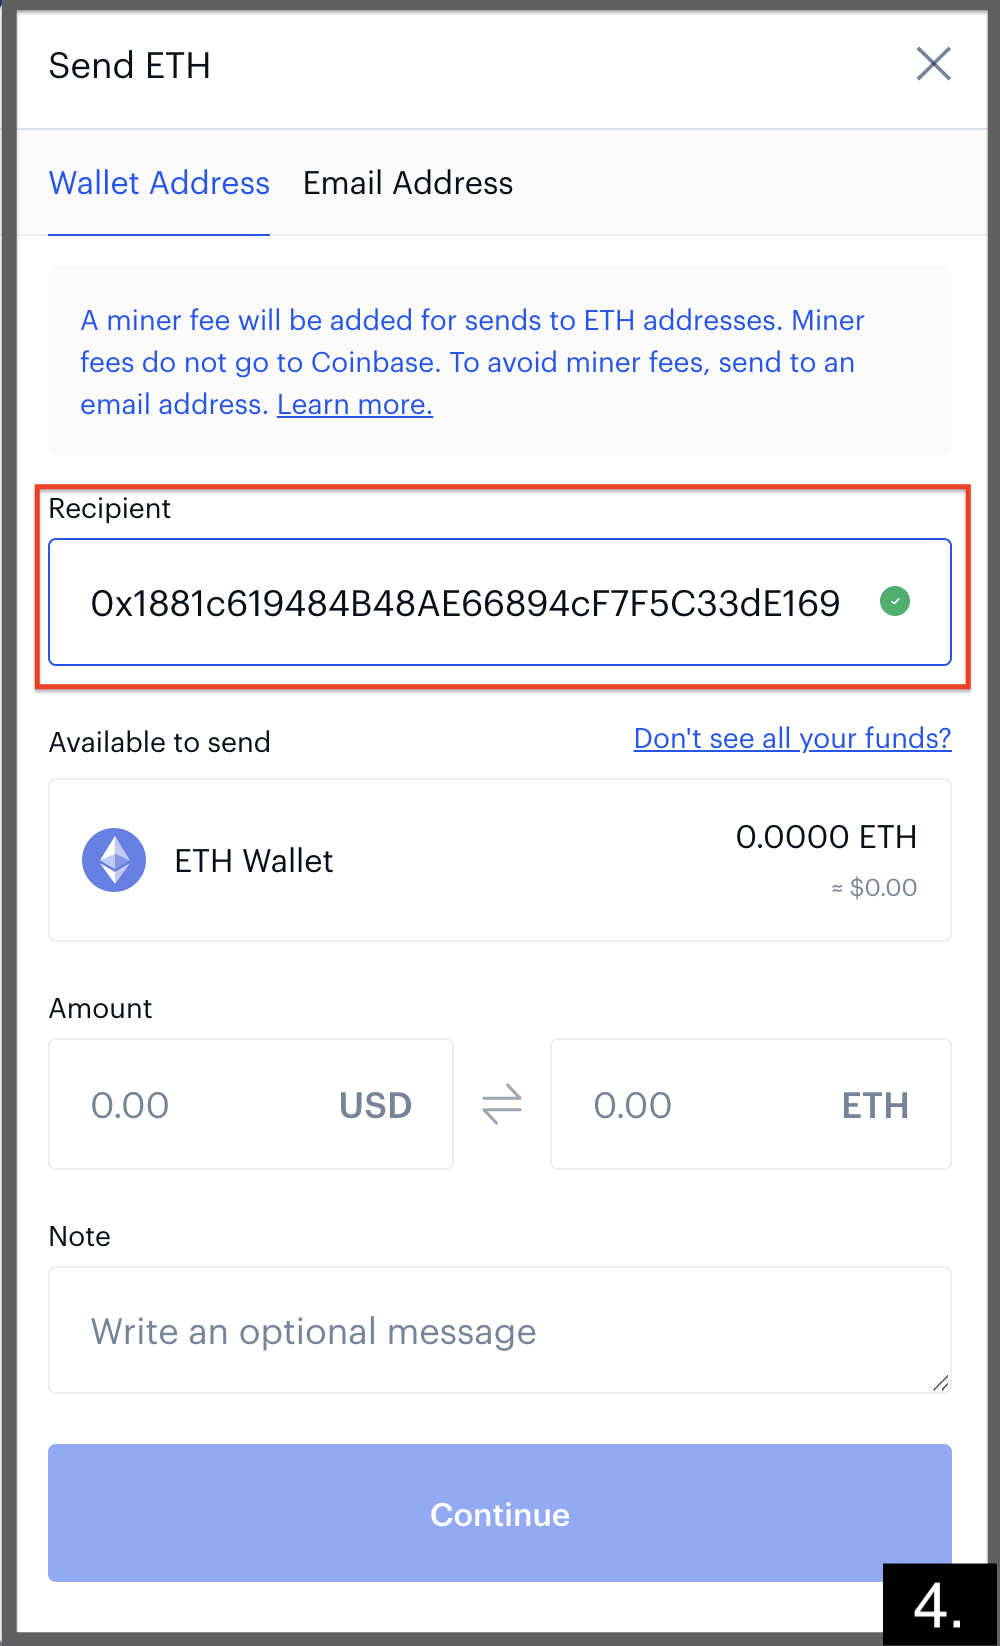 What is my ethereum wallet address откуда берутся деньги для биткоинов